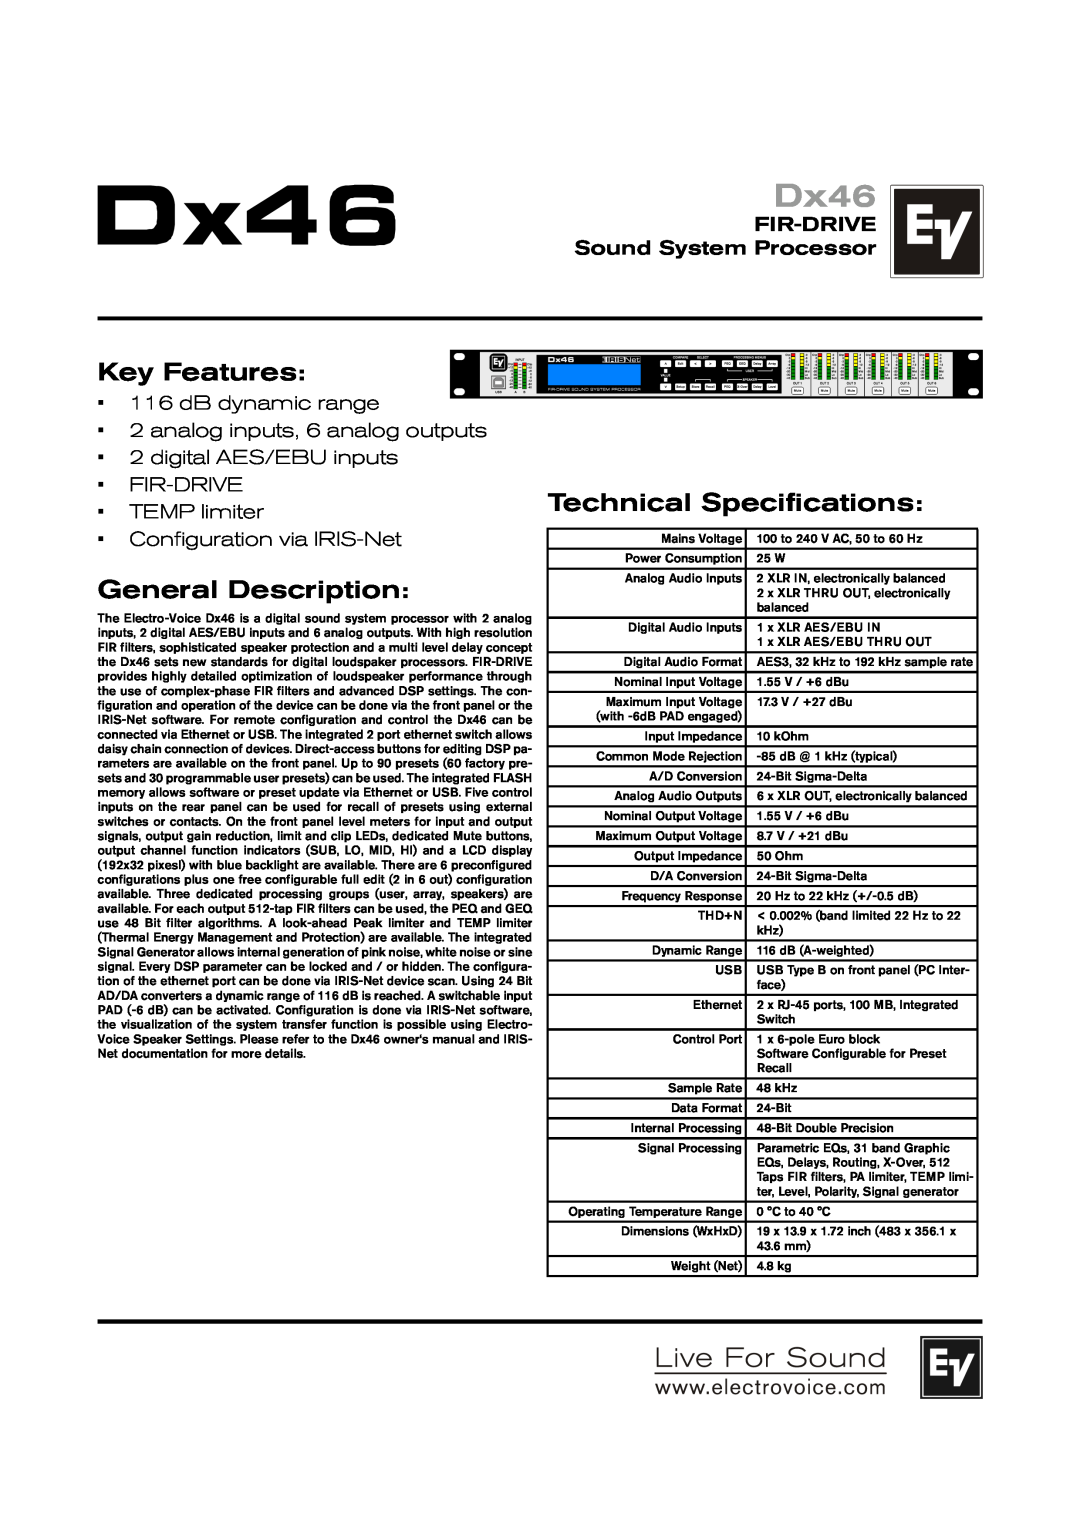 Electro-Voice DX46 technical specifications Dx46, Key Features, General Description, Technical Specifications 